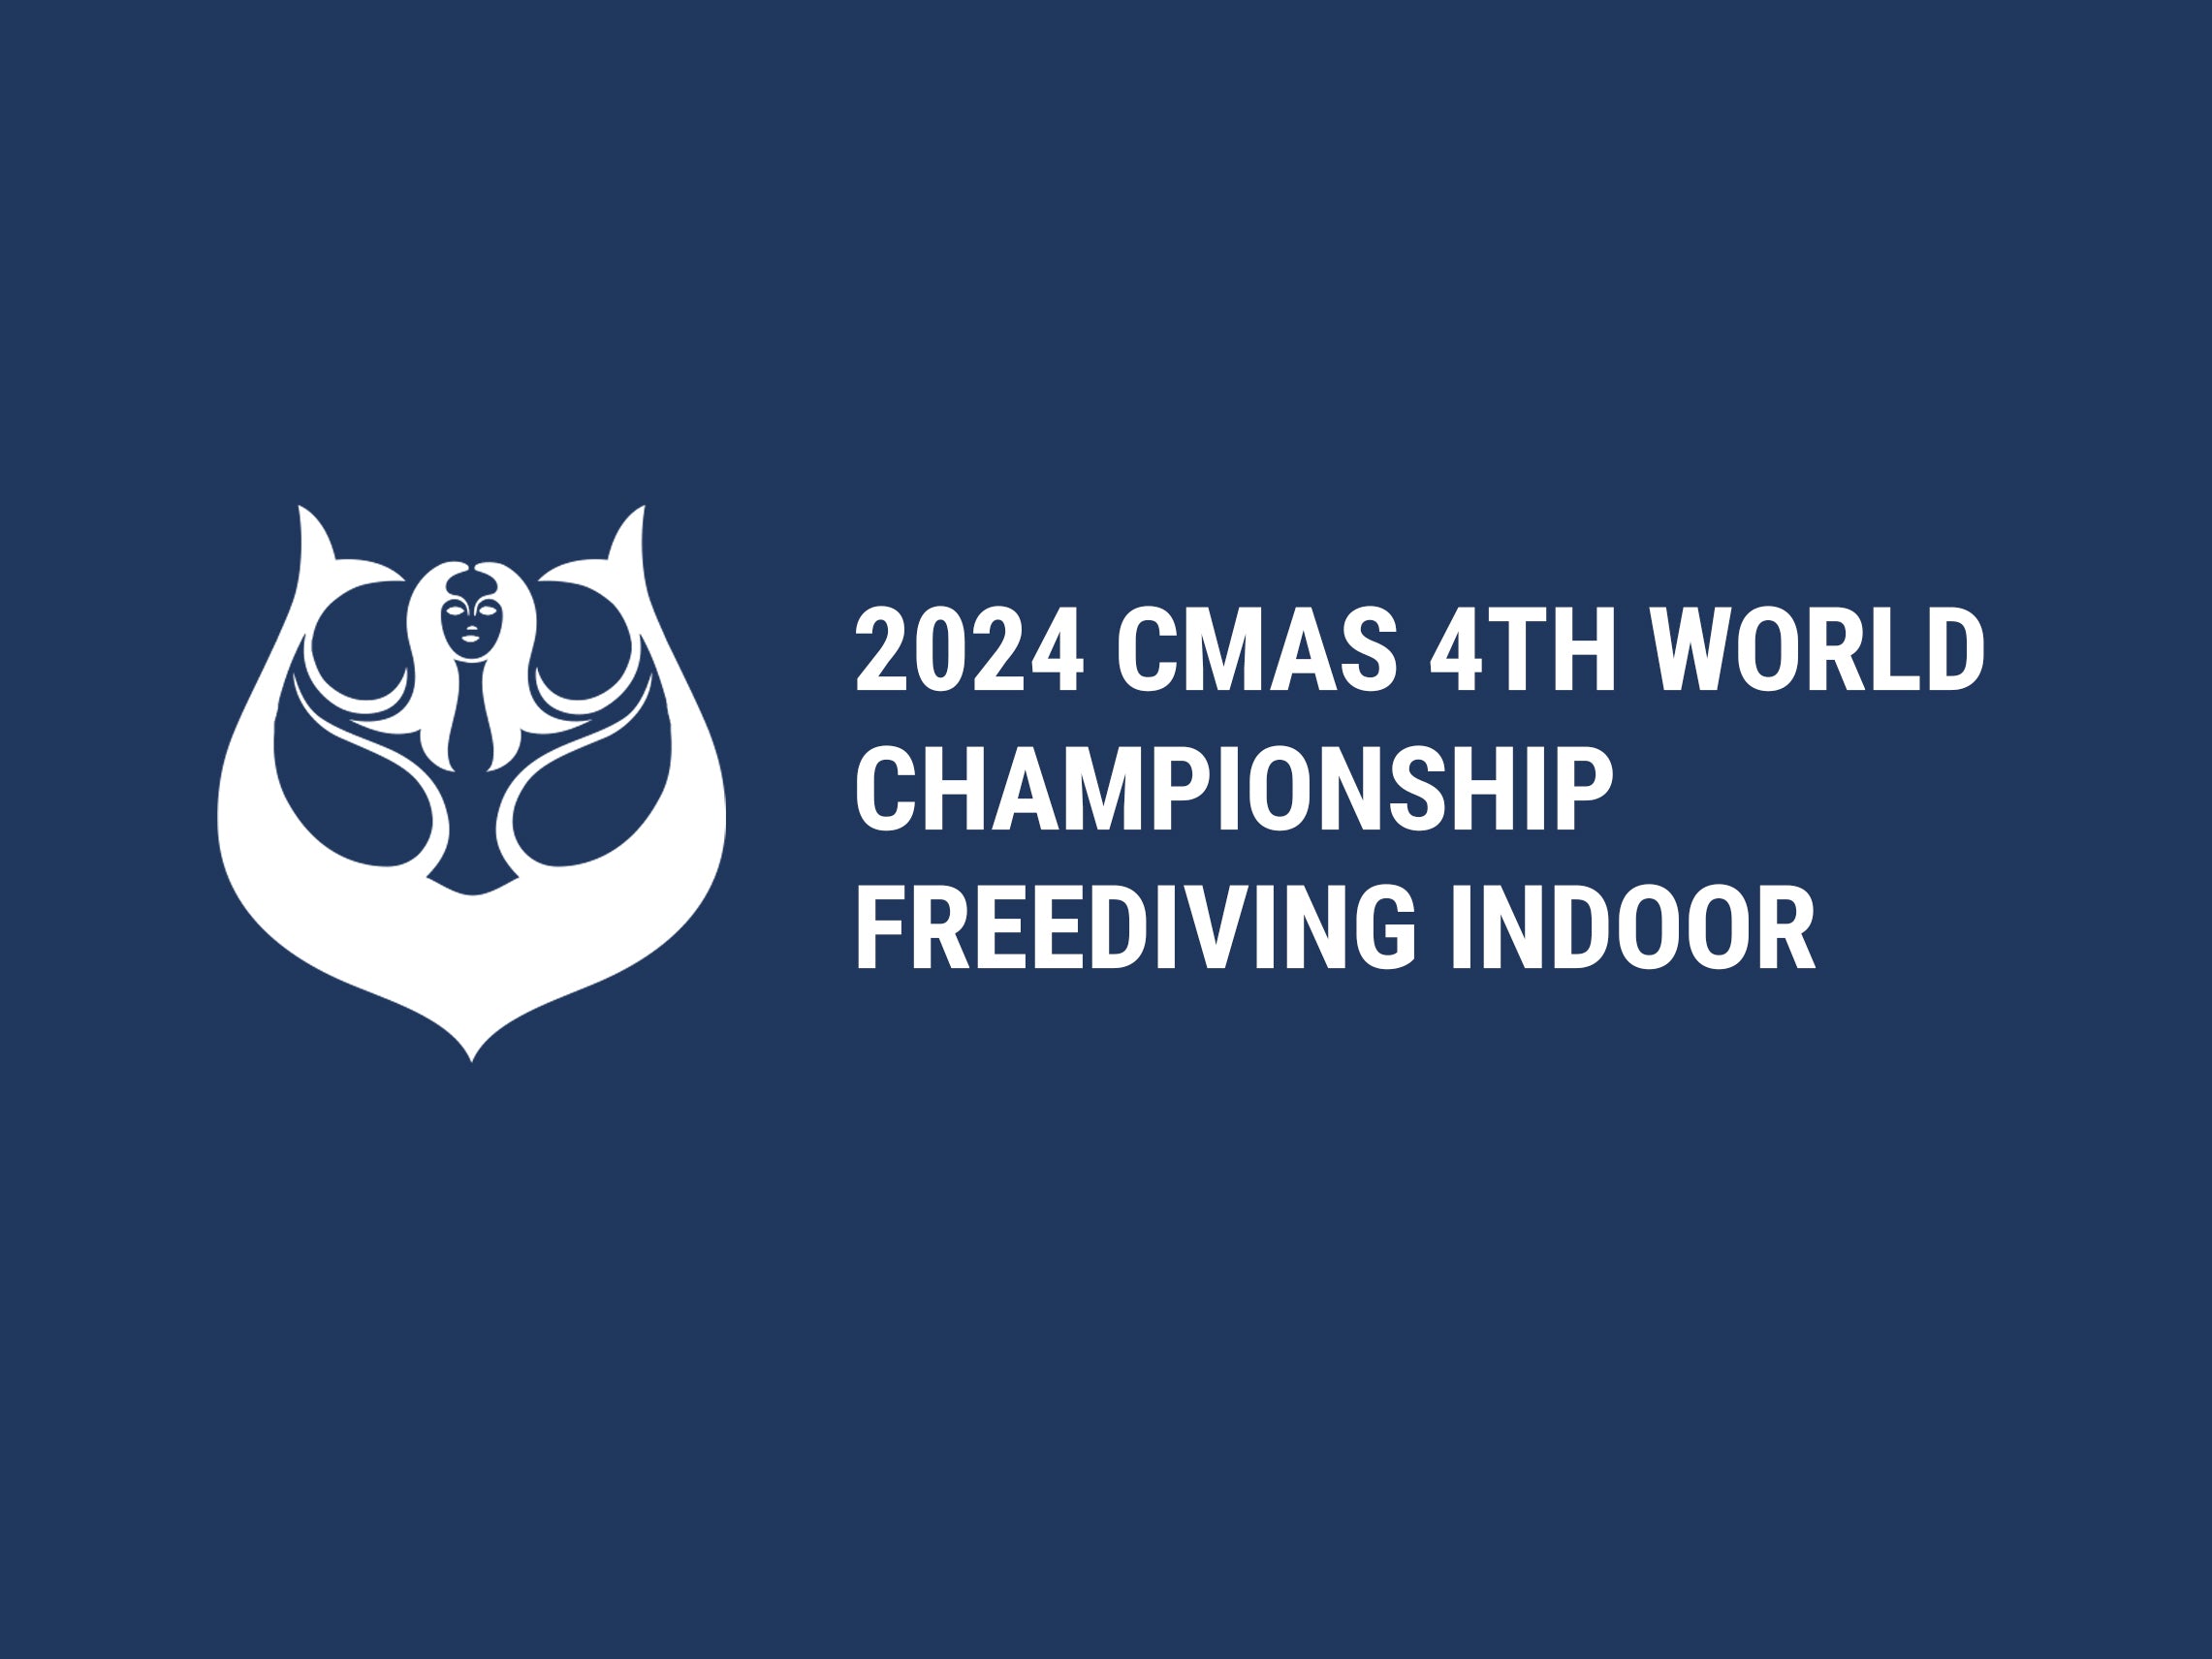 CMAS 14th World Championship Freediving Indoor